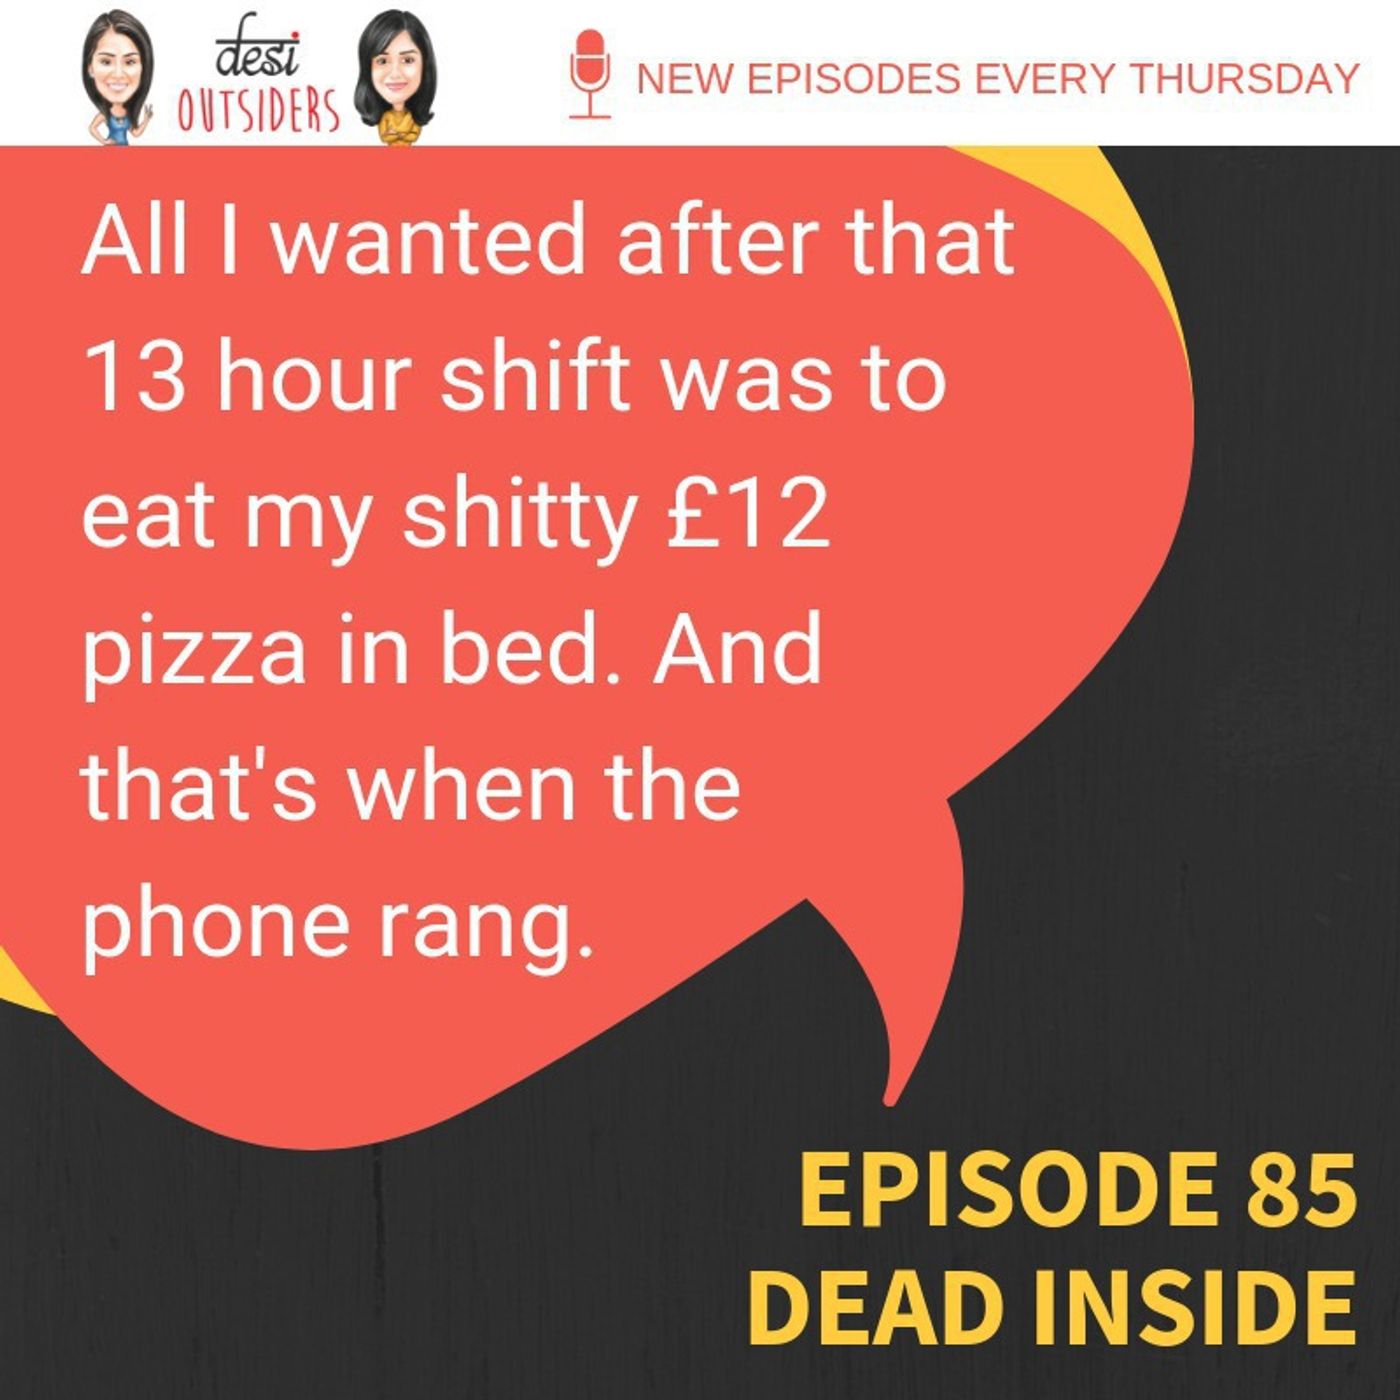 S5 Ep31: Episode 85 - Dead inside